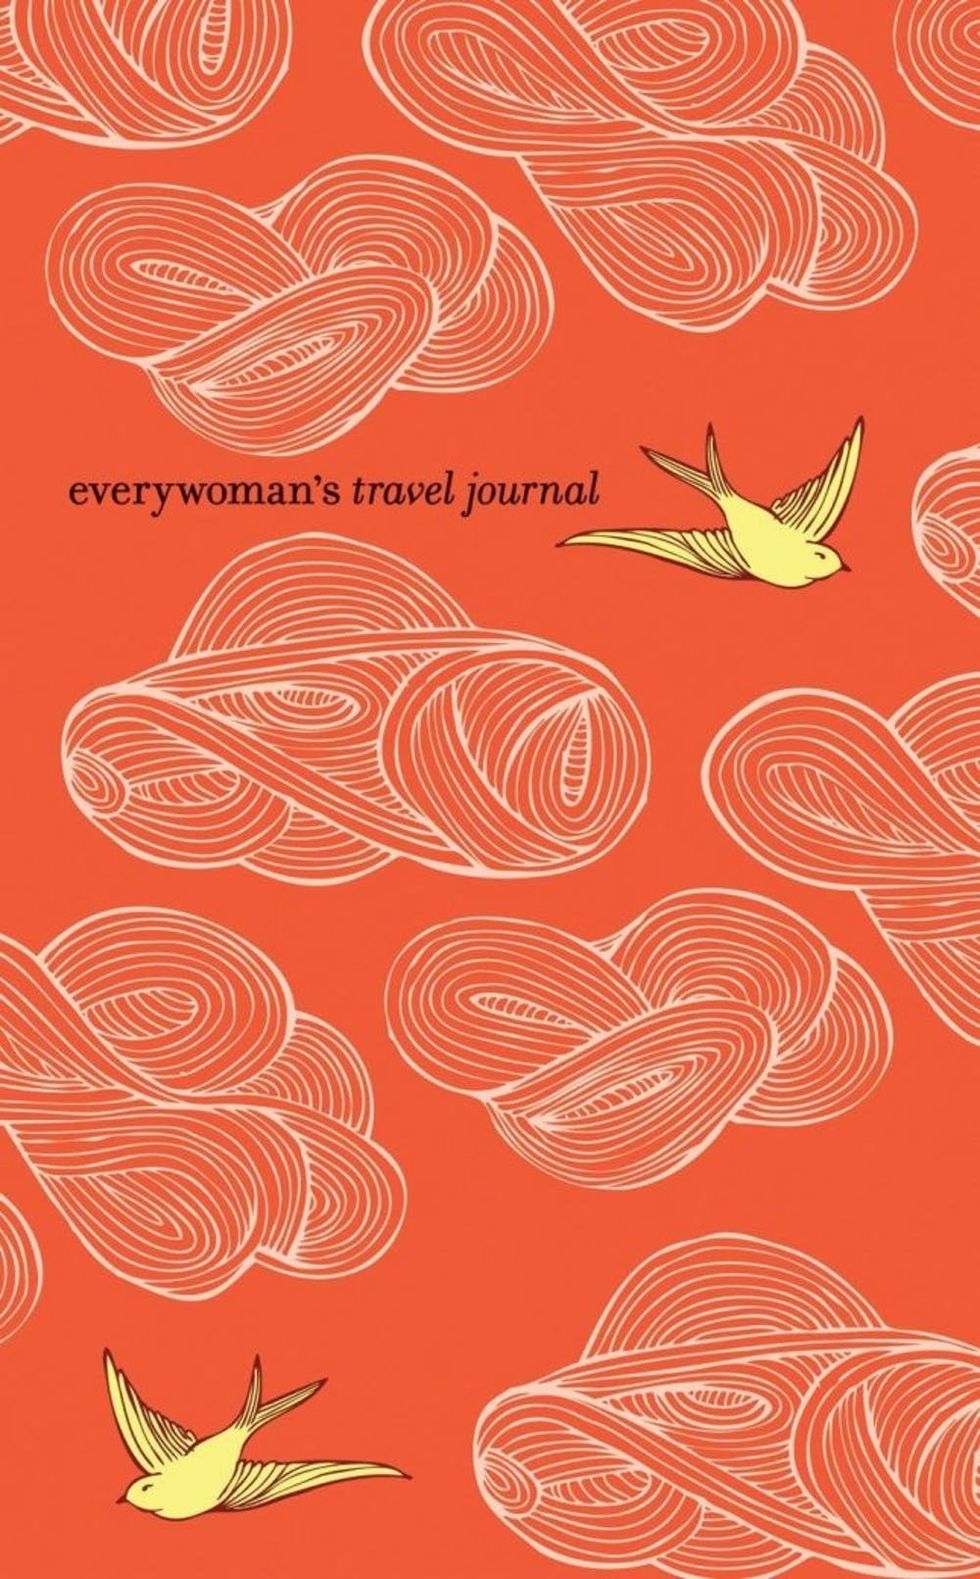 everywoman's travel journal